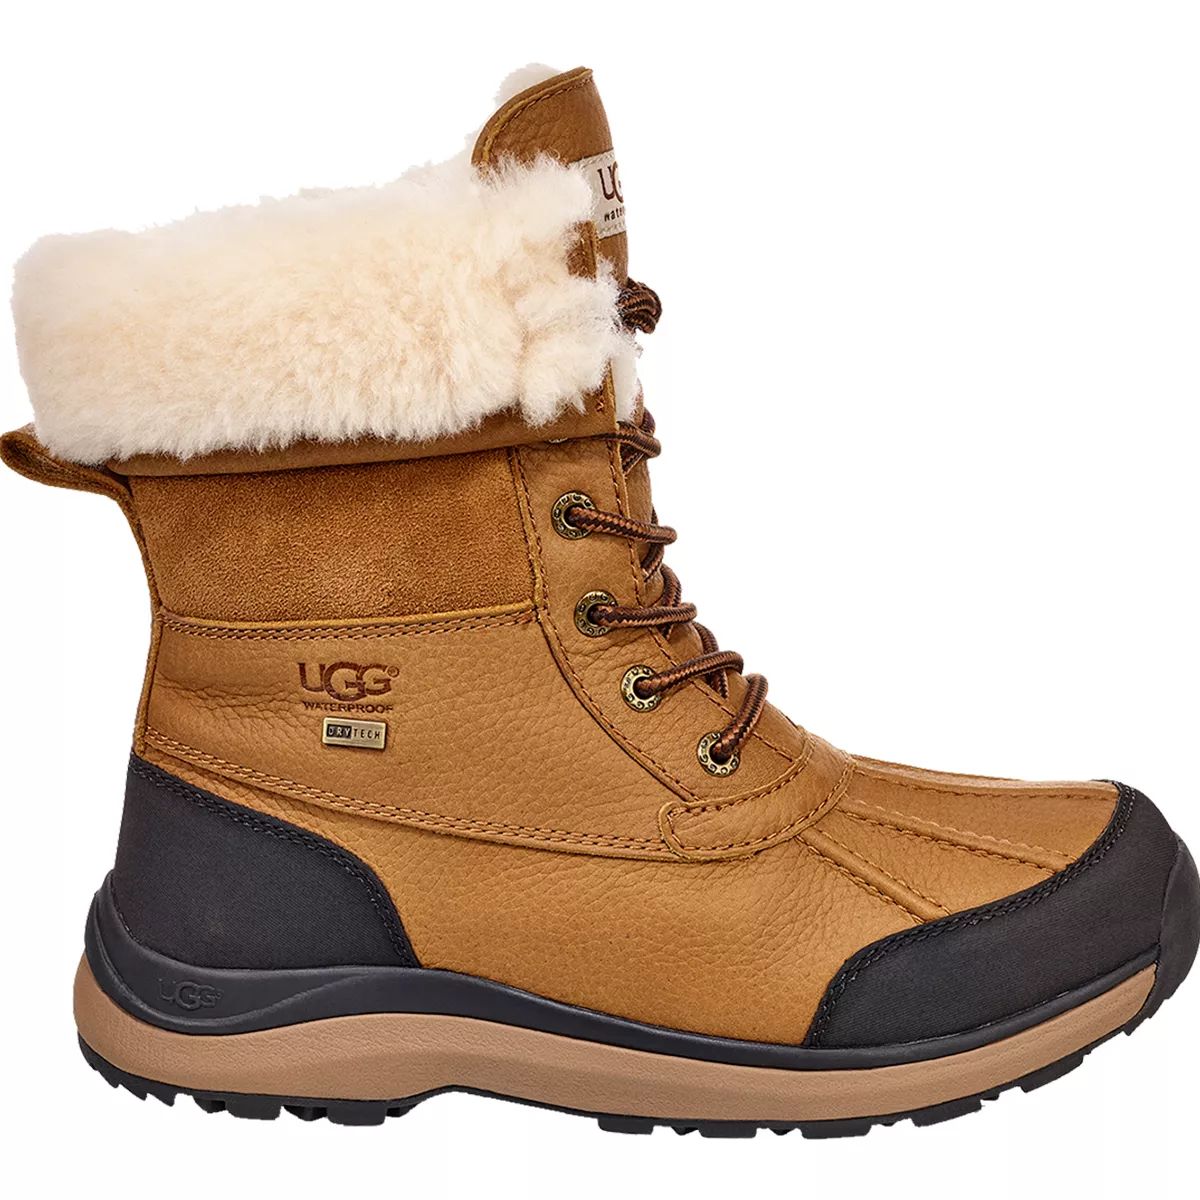 UGG Women's Adirondack Tall Winter Boots  High Top Waterproof Insulated Wool